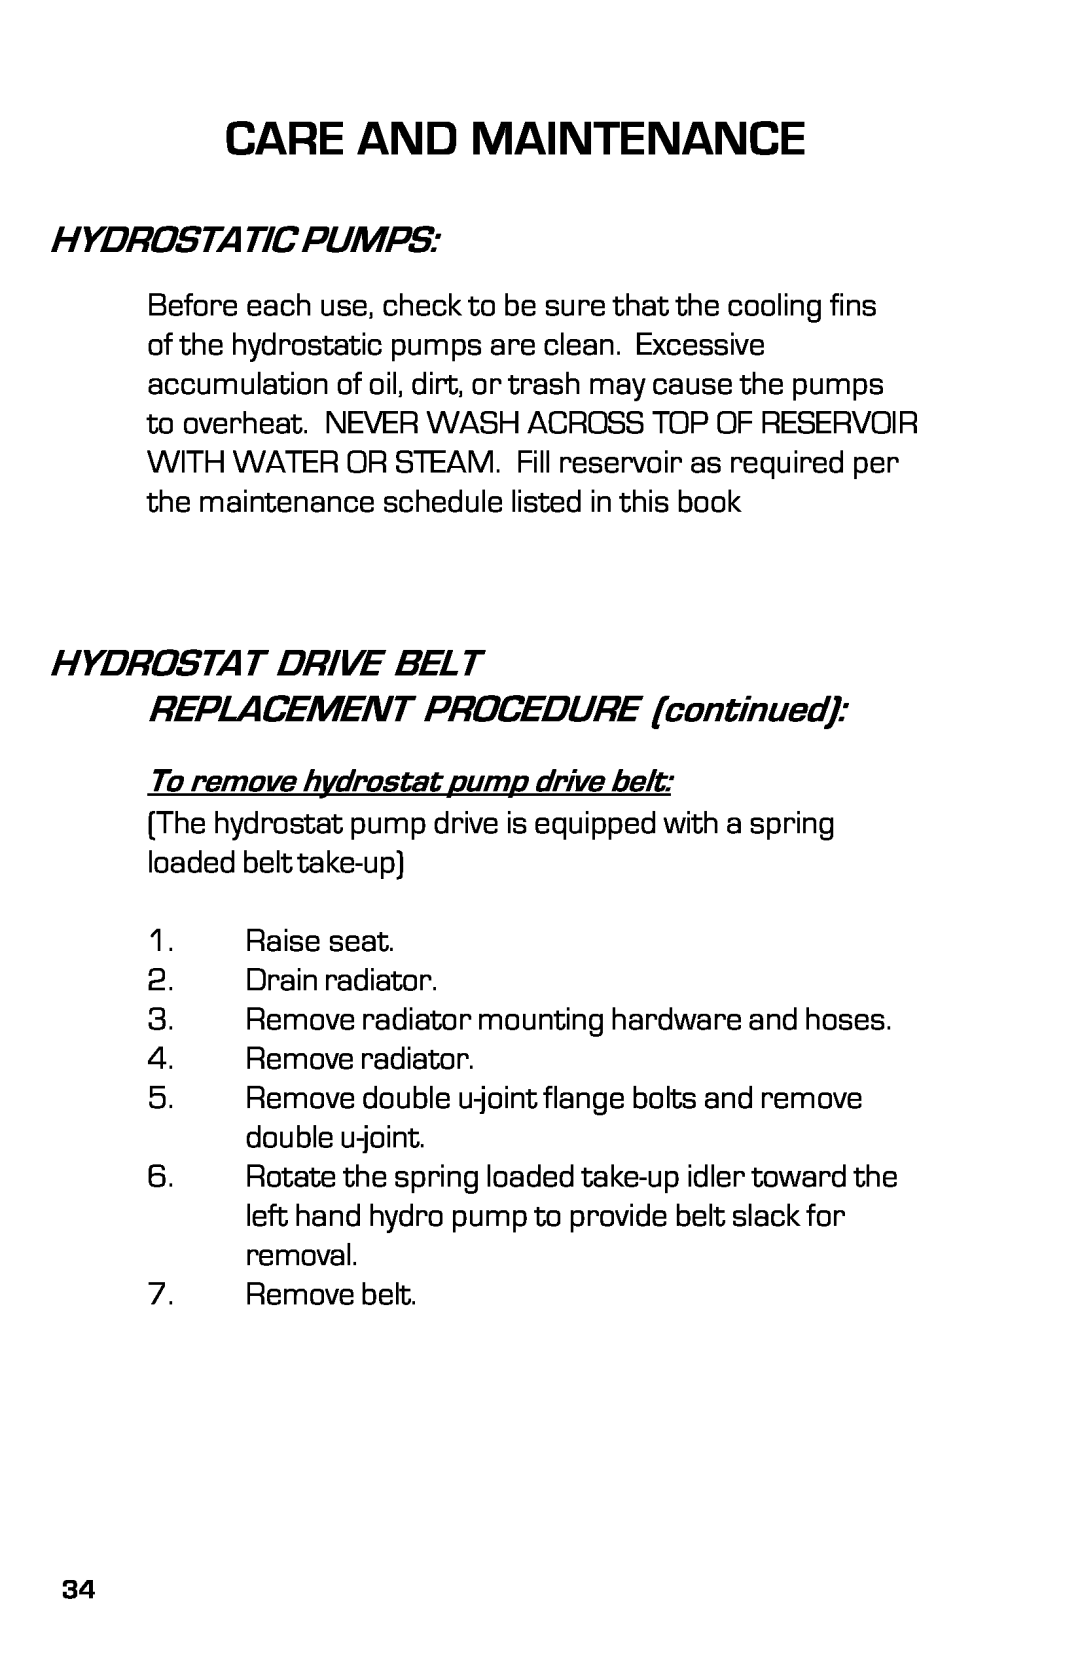 Dixon 8000D manual Hydrostatic Pumps, HYDROSTAT DRIVE BELT REPLACEMENT PROCEDURE continued, Care And Maintenance 